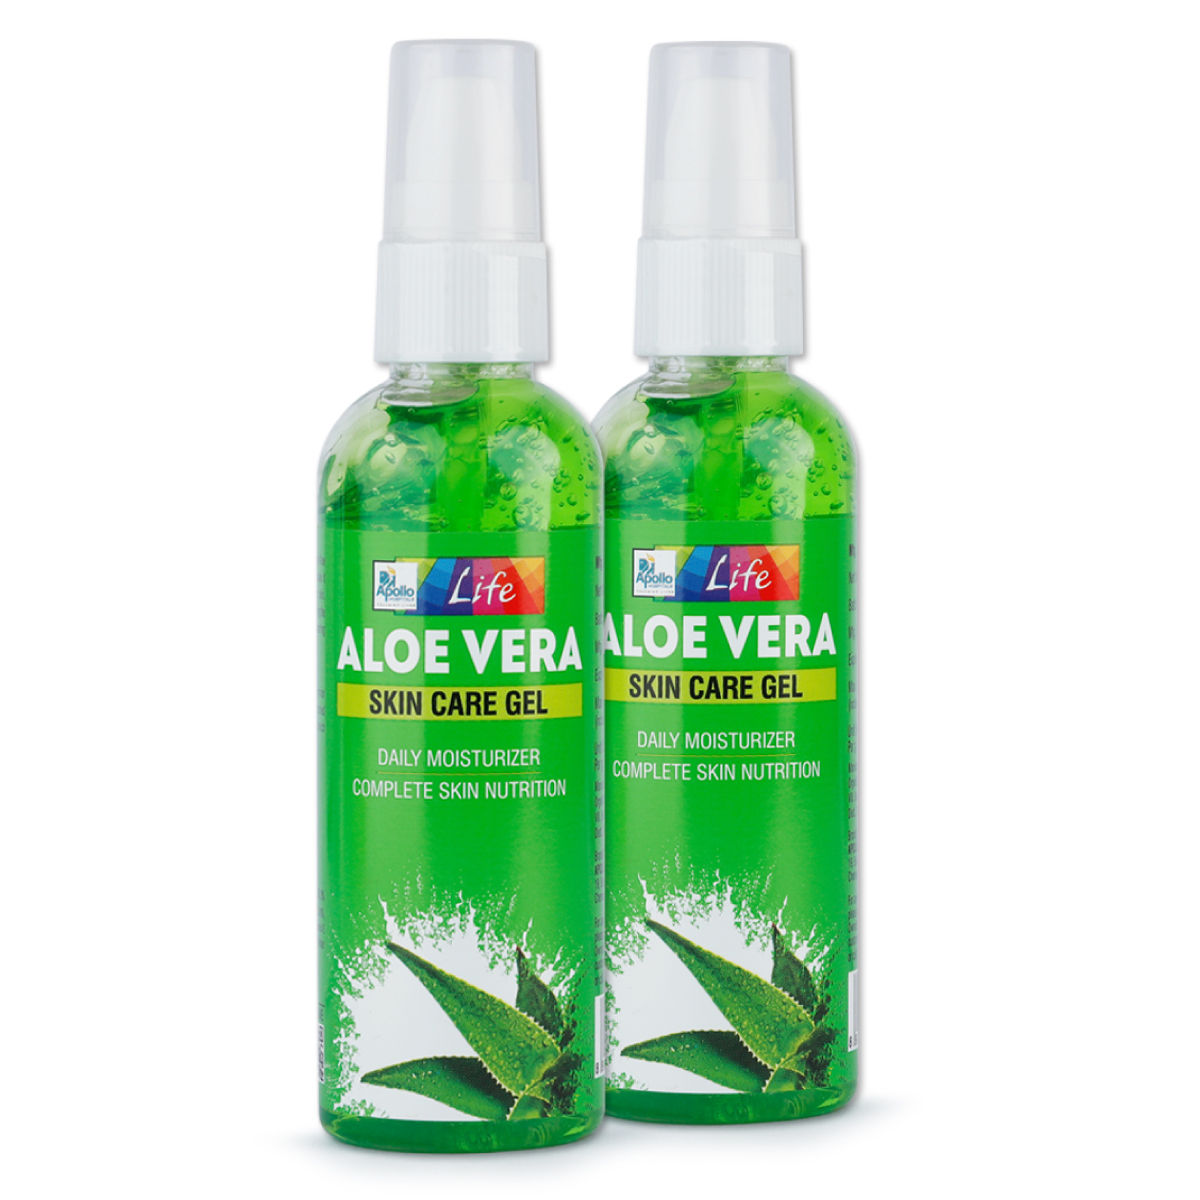 Buy Apollo Life Aloe Vera Skin Care Gel, 200 gm (2x100 gm) Online